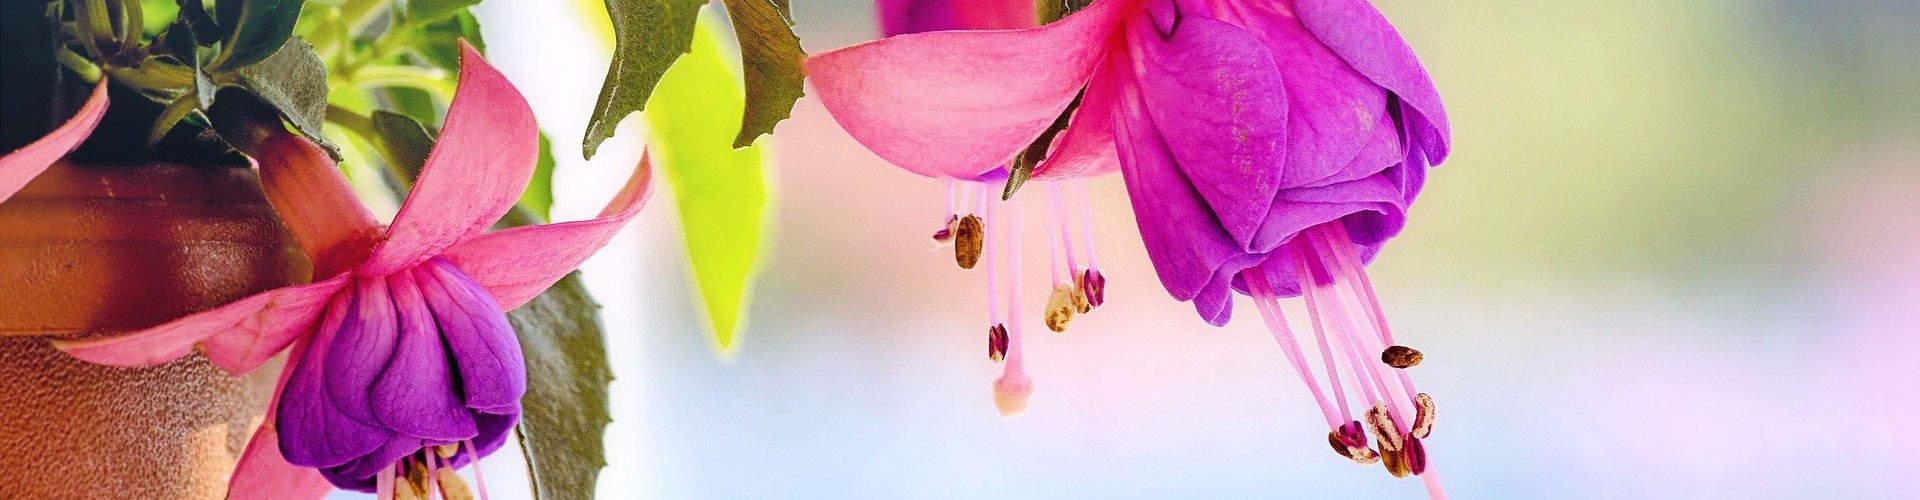 fuchsia flower in close up